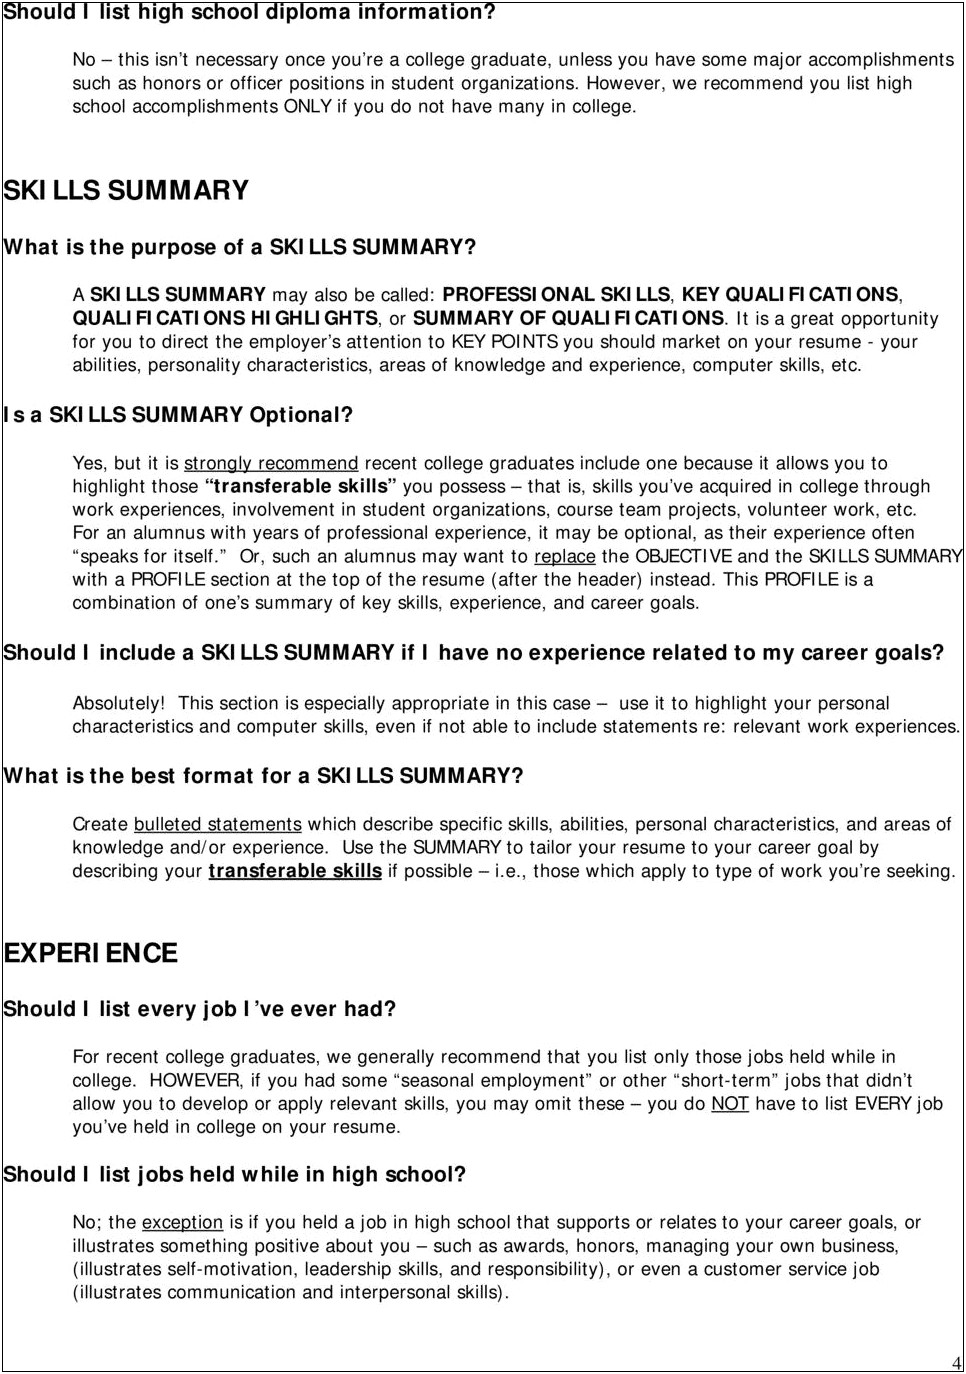 Resume Professional Skills If You Have No Skills